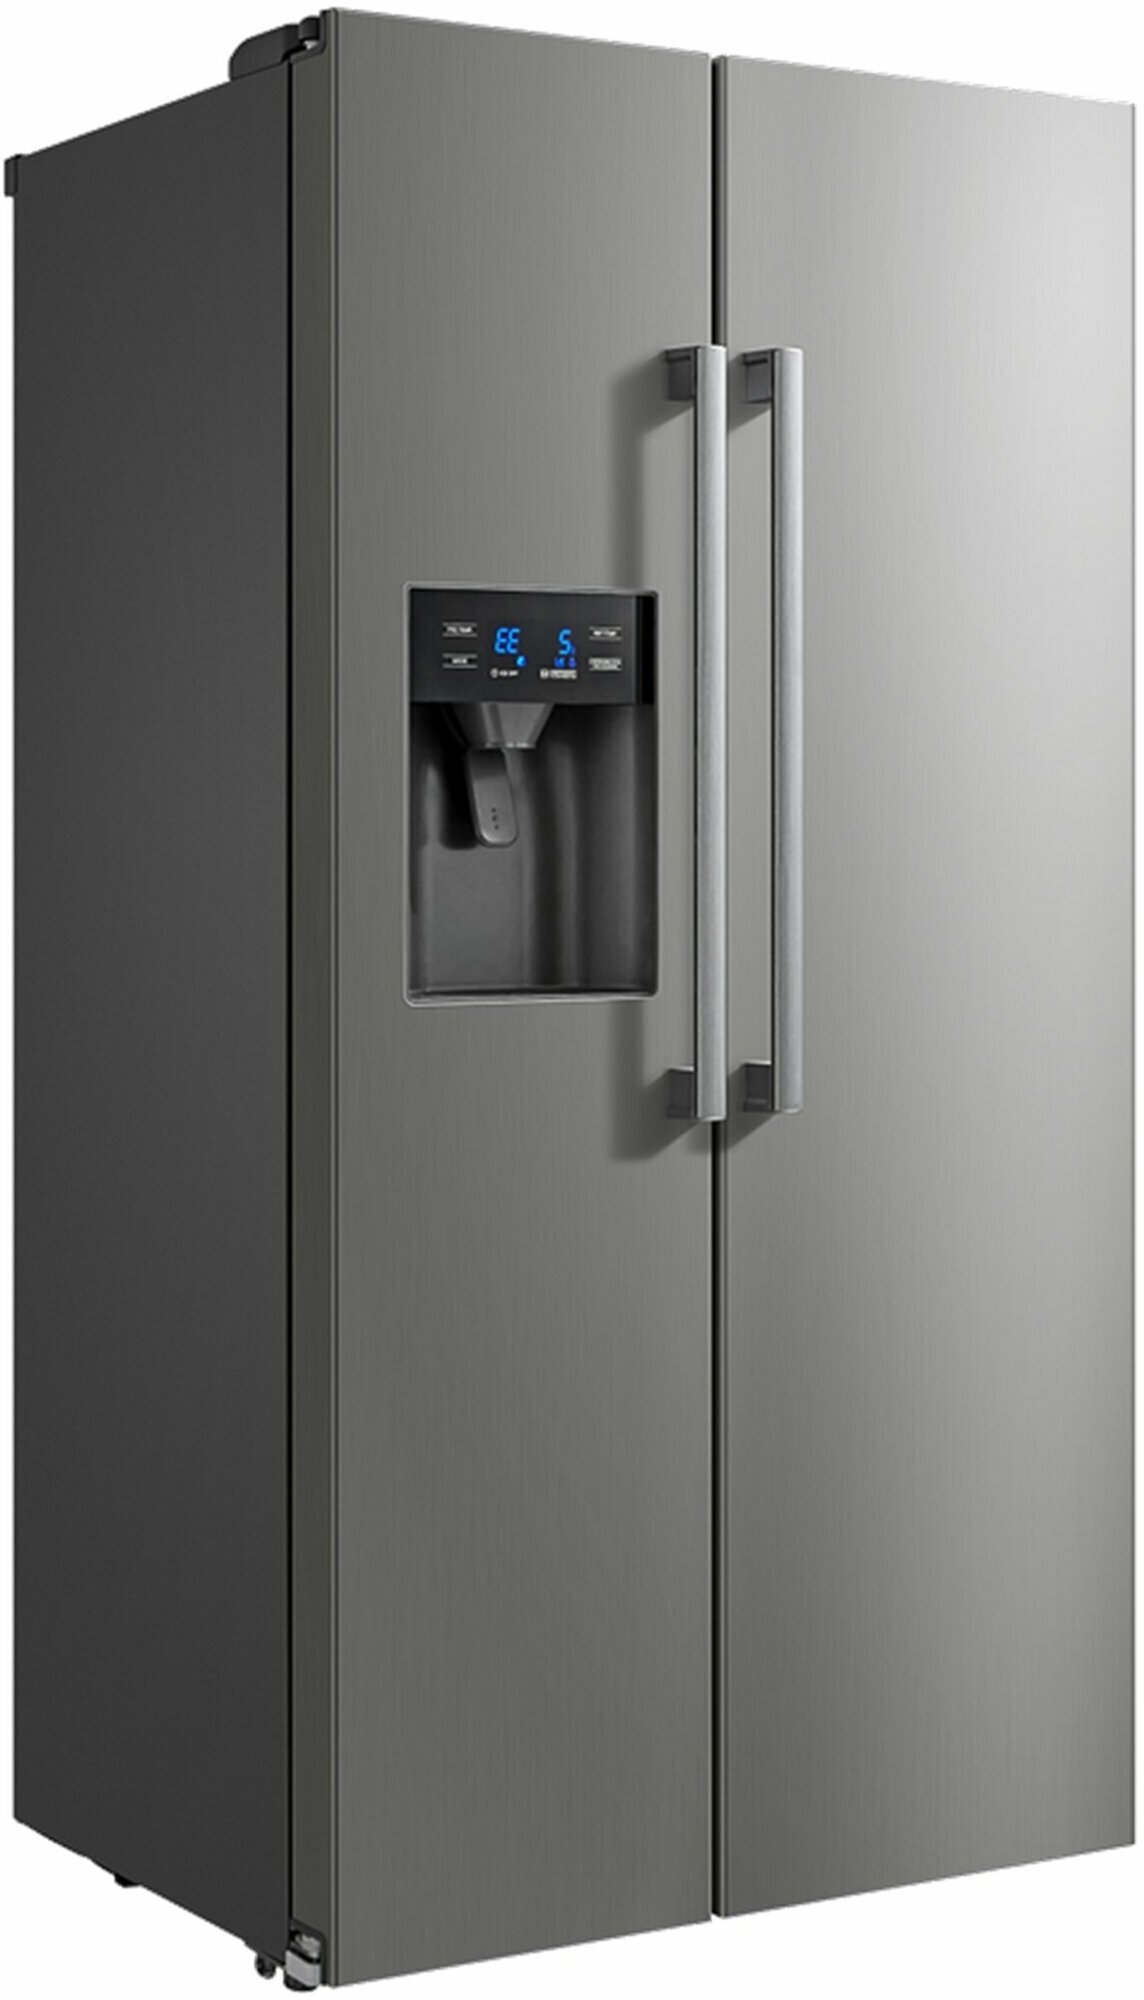 Холодильник Бирюса SBS 573 I, inox